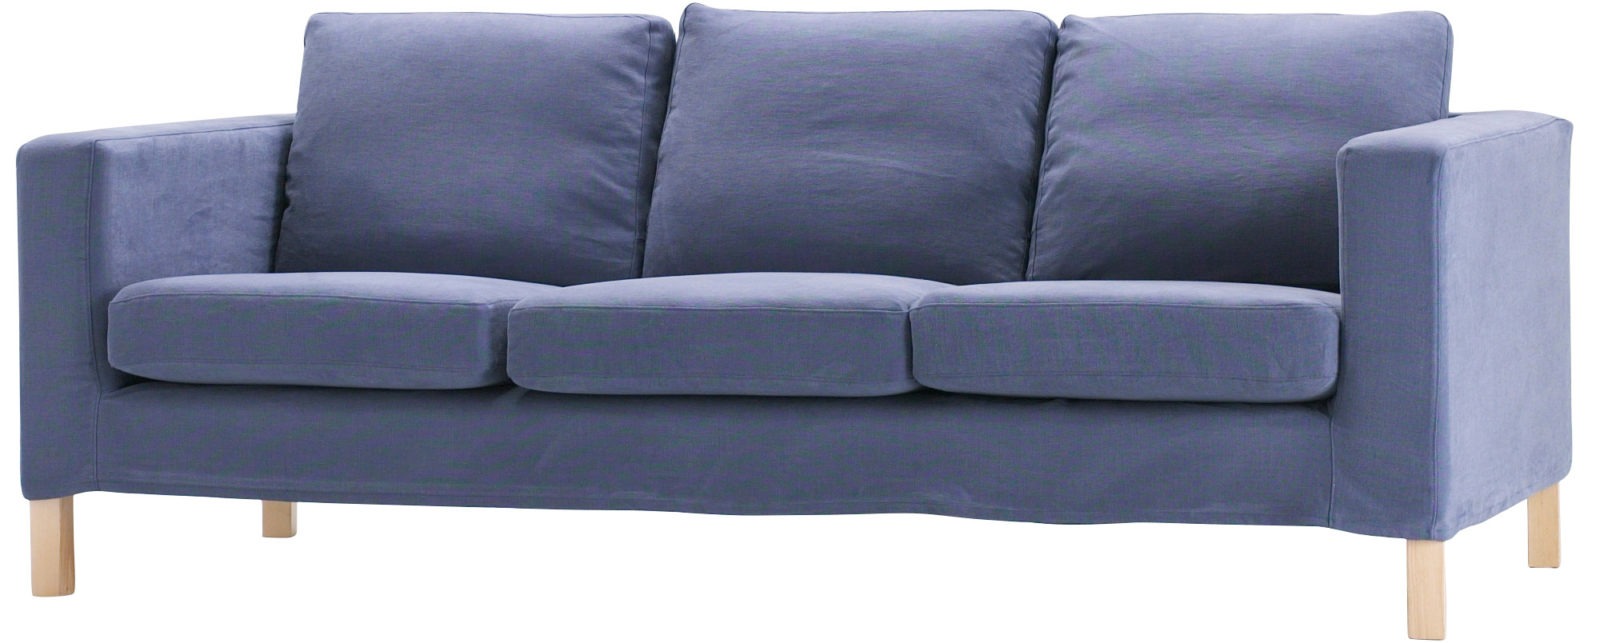 Blue three-seater sofa with wooden legs, KARLANDA.